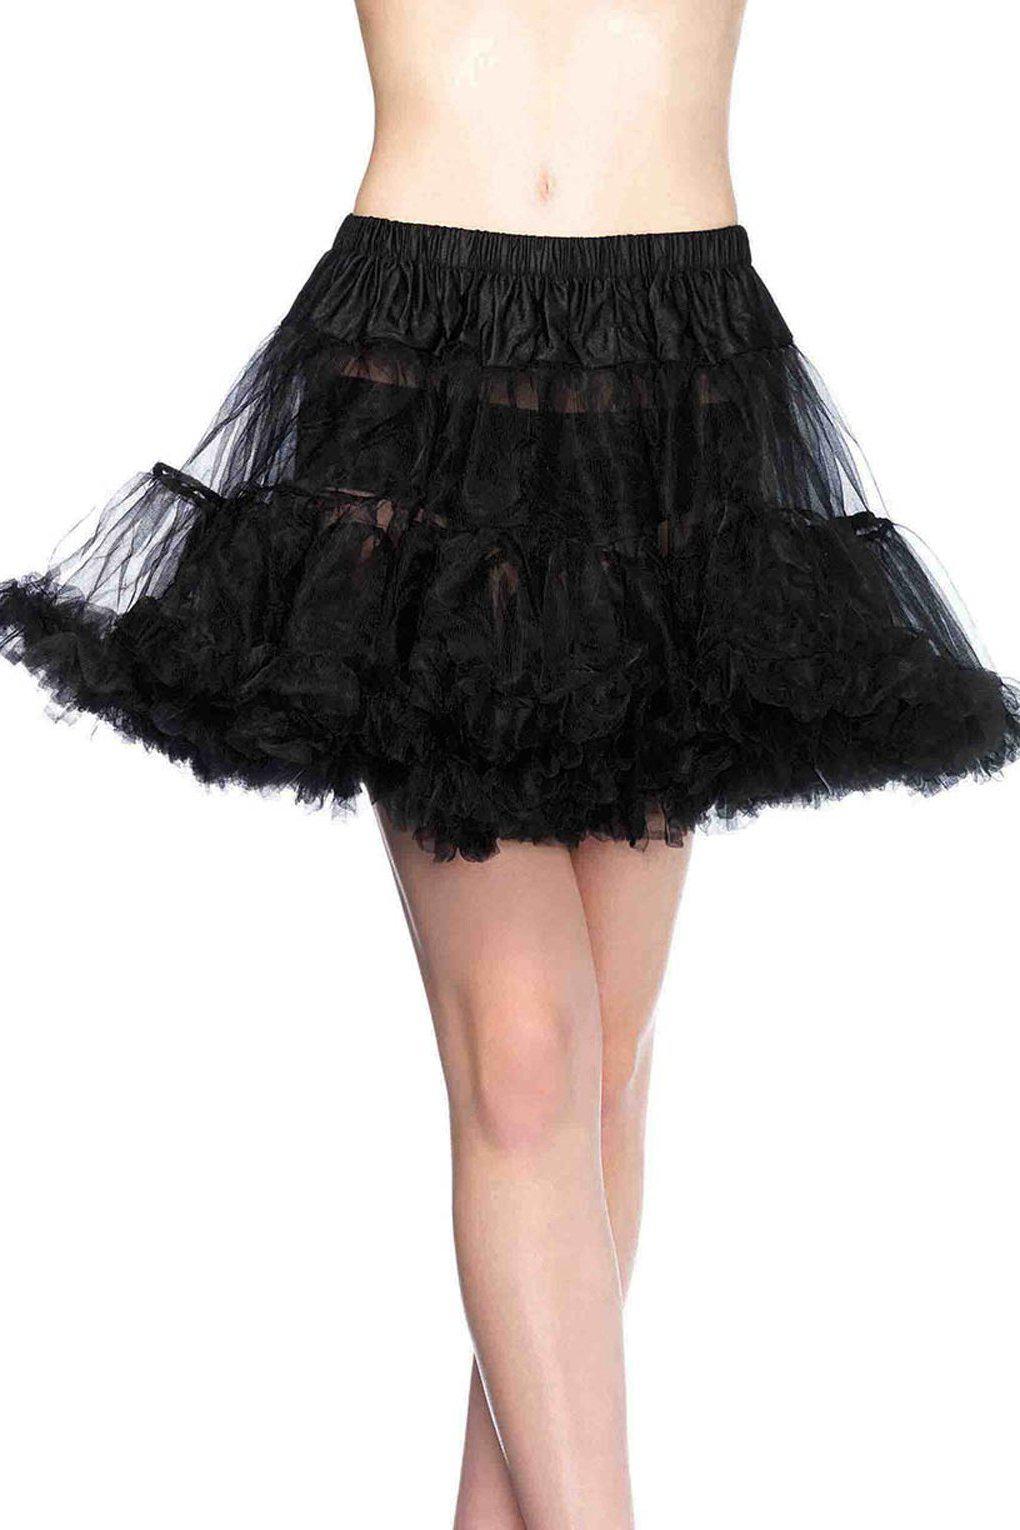 Plus Size Short Petticoat-TuTu + Petticoat-Leg Avenue-Black-1/2XL-SEXYSHOES.COM